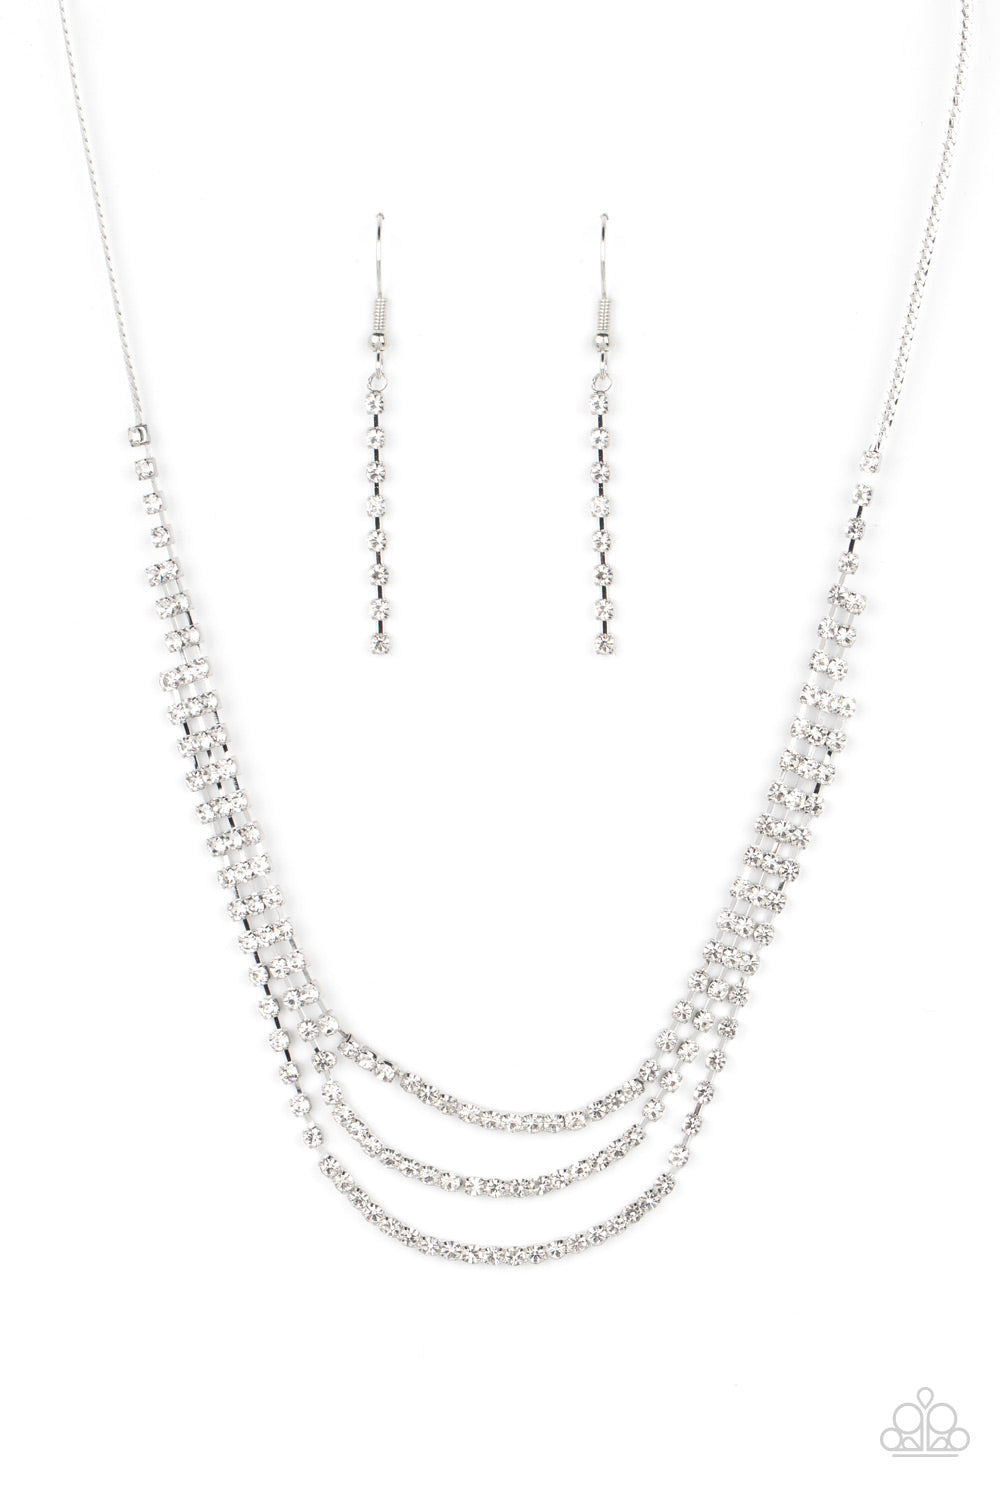 Surreal Sparkle - White Necklace - Paparazzi - Dare2bdazzlin N Jewelry